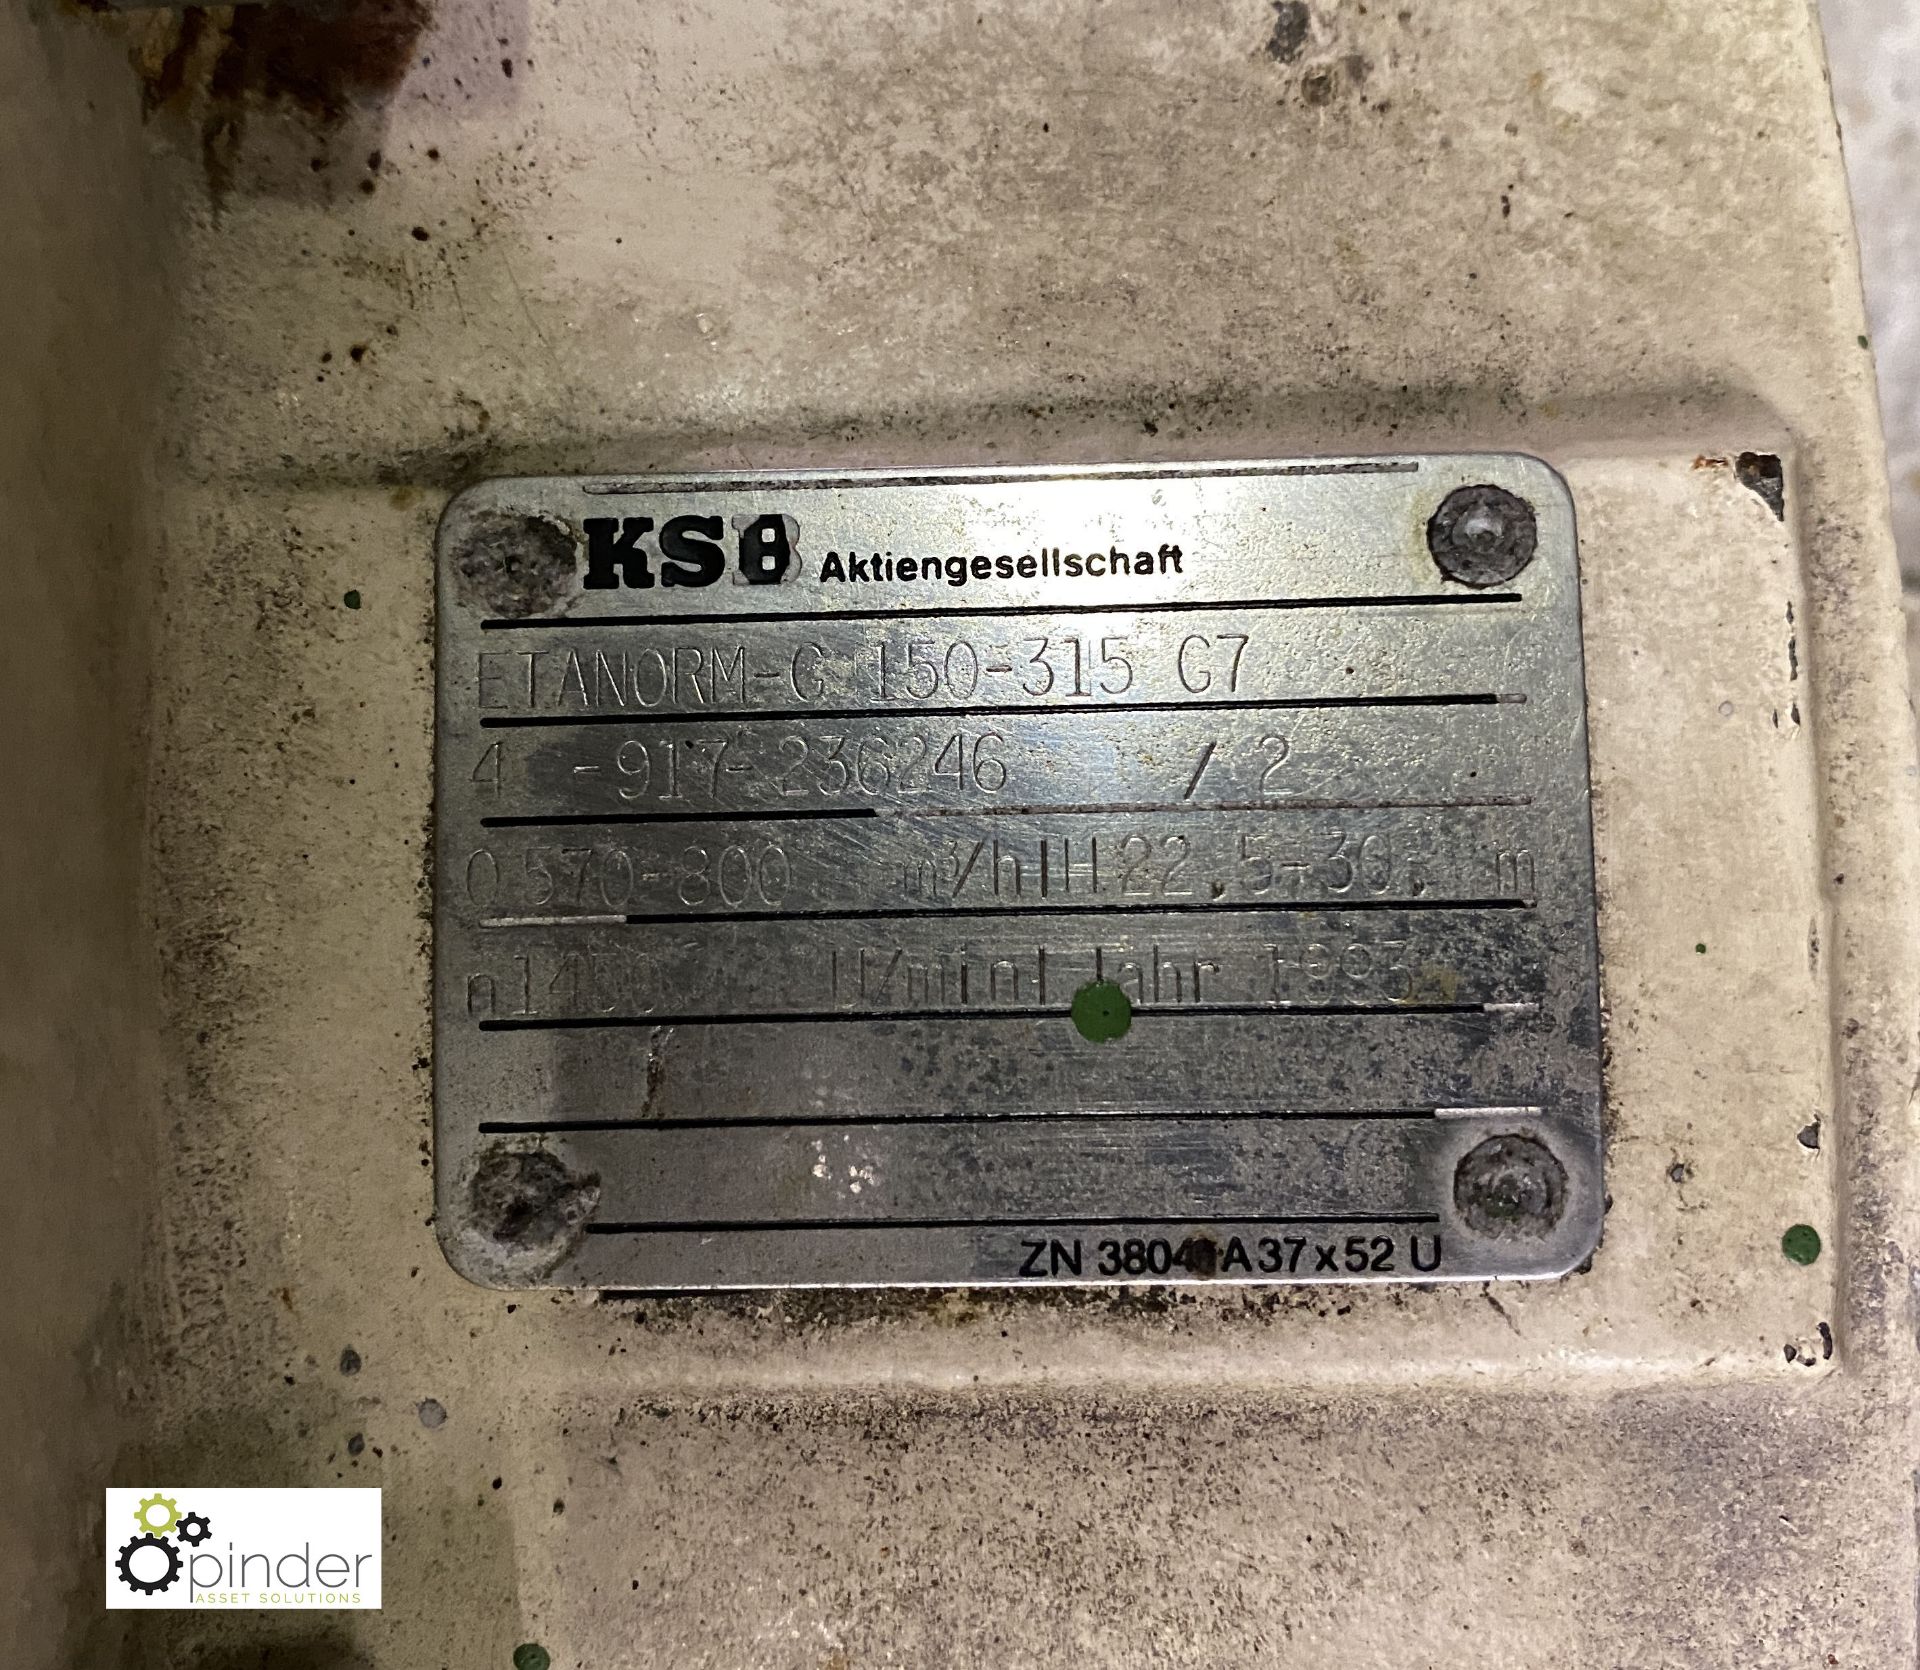 Pump Set - KSB Etanorm G150-315 G7, S/N 4-917-2362 - Image 2 of 3